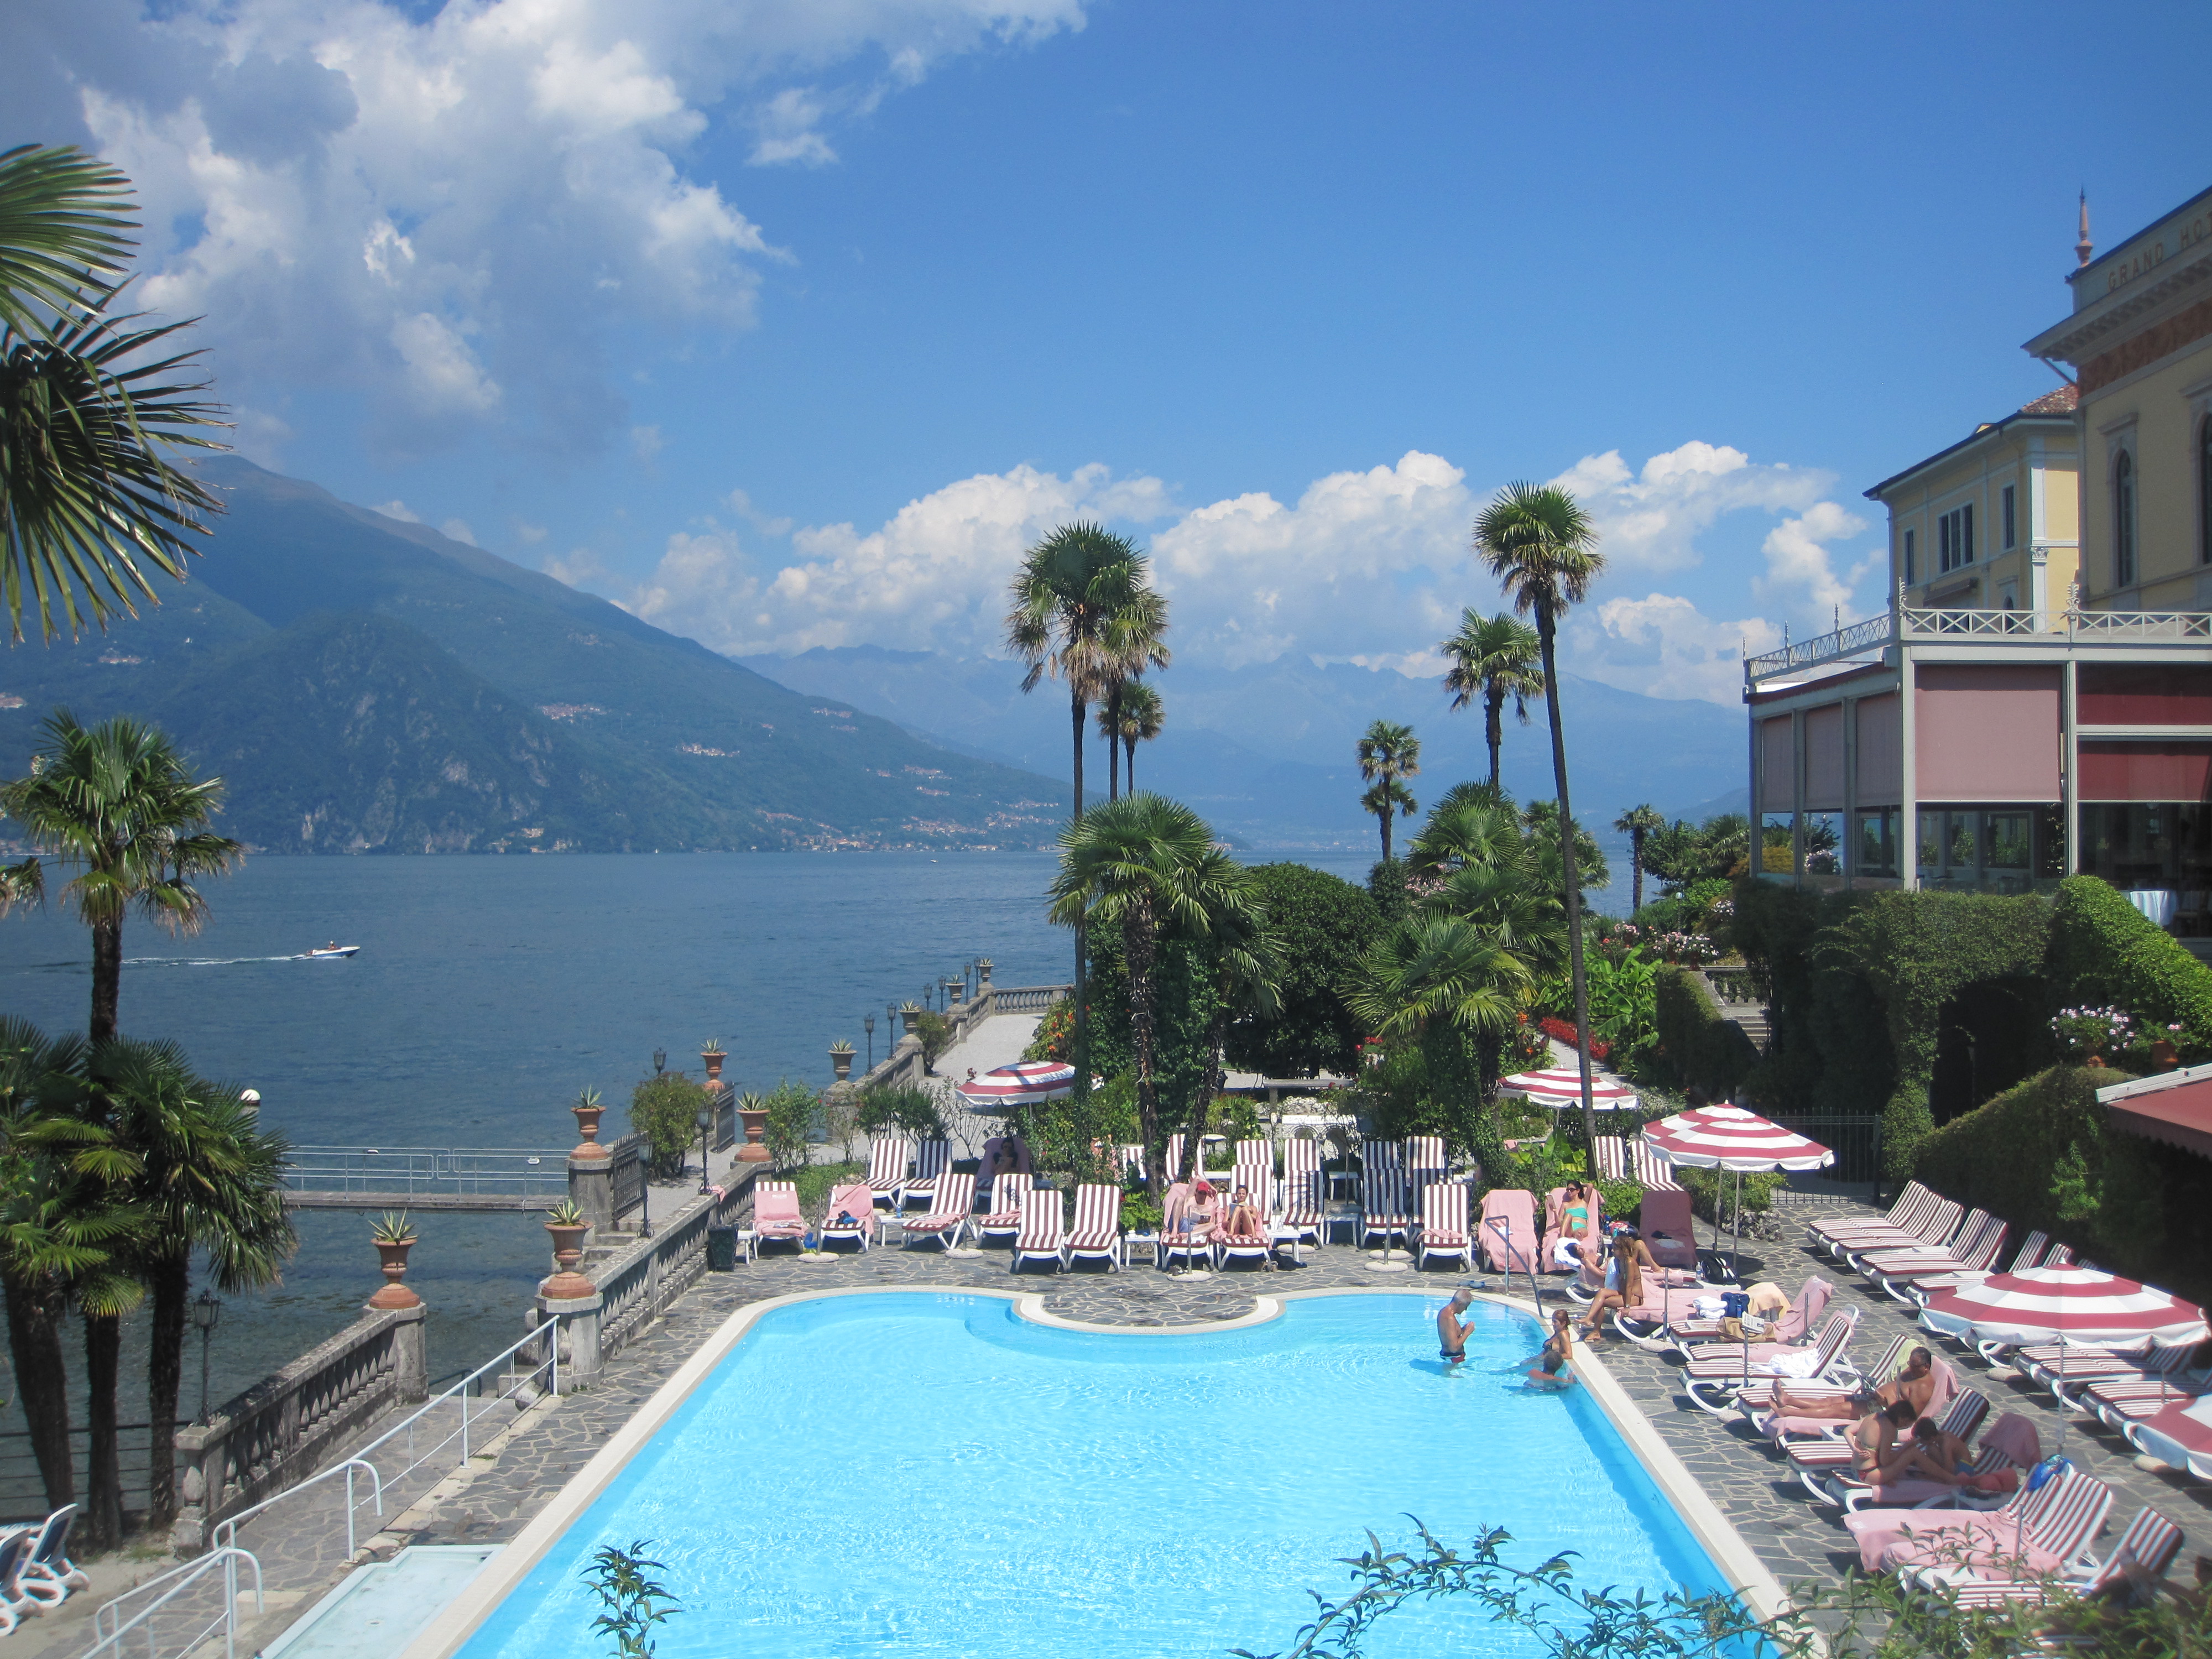 Swimming Pool of Grand Hotel Villa Serbelloni, Bellagio. Photograph by The Traveling Gentleman @travelinggentleman